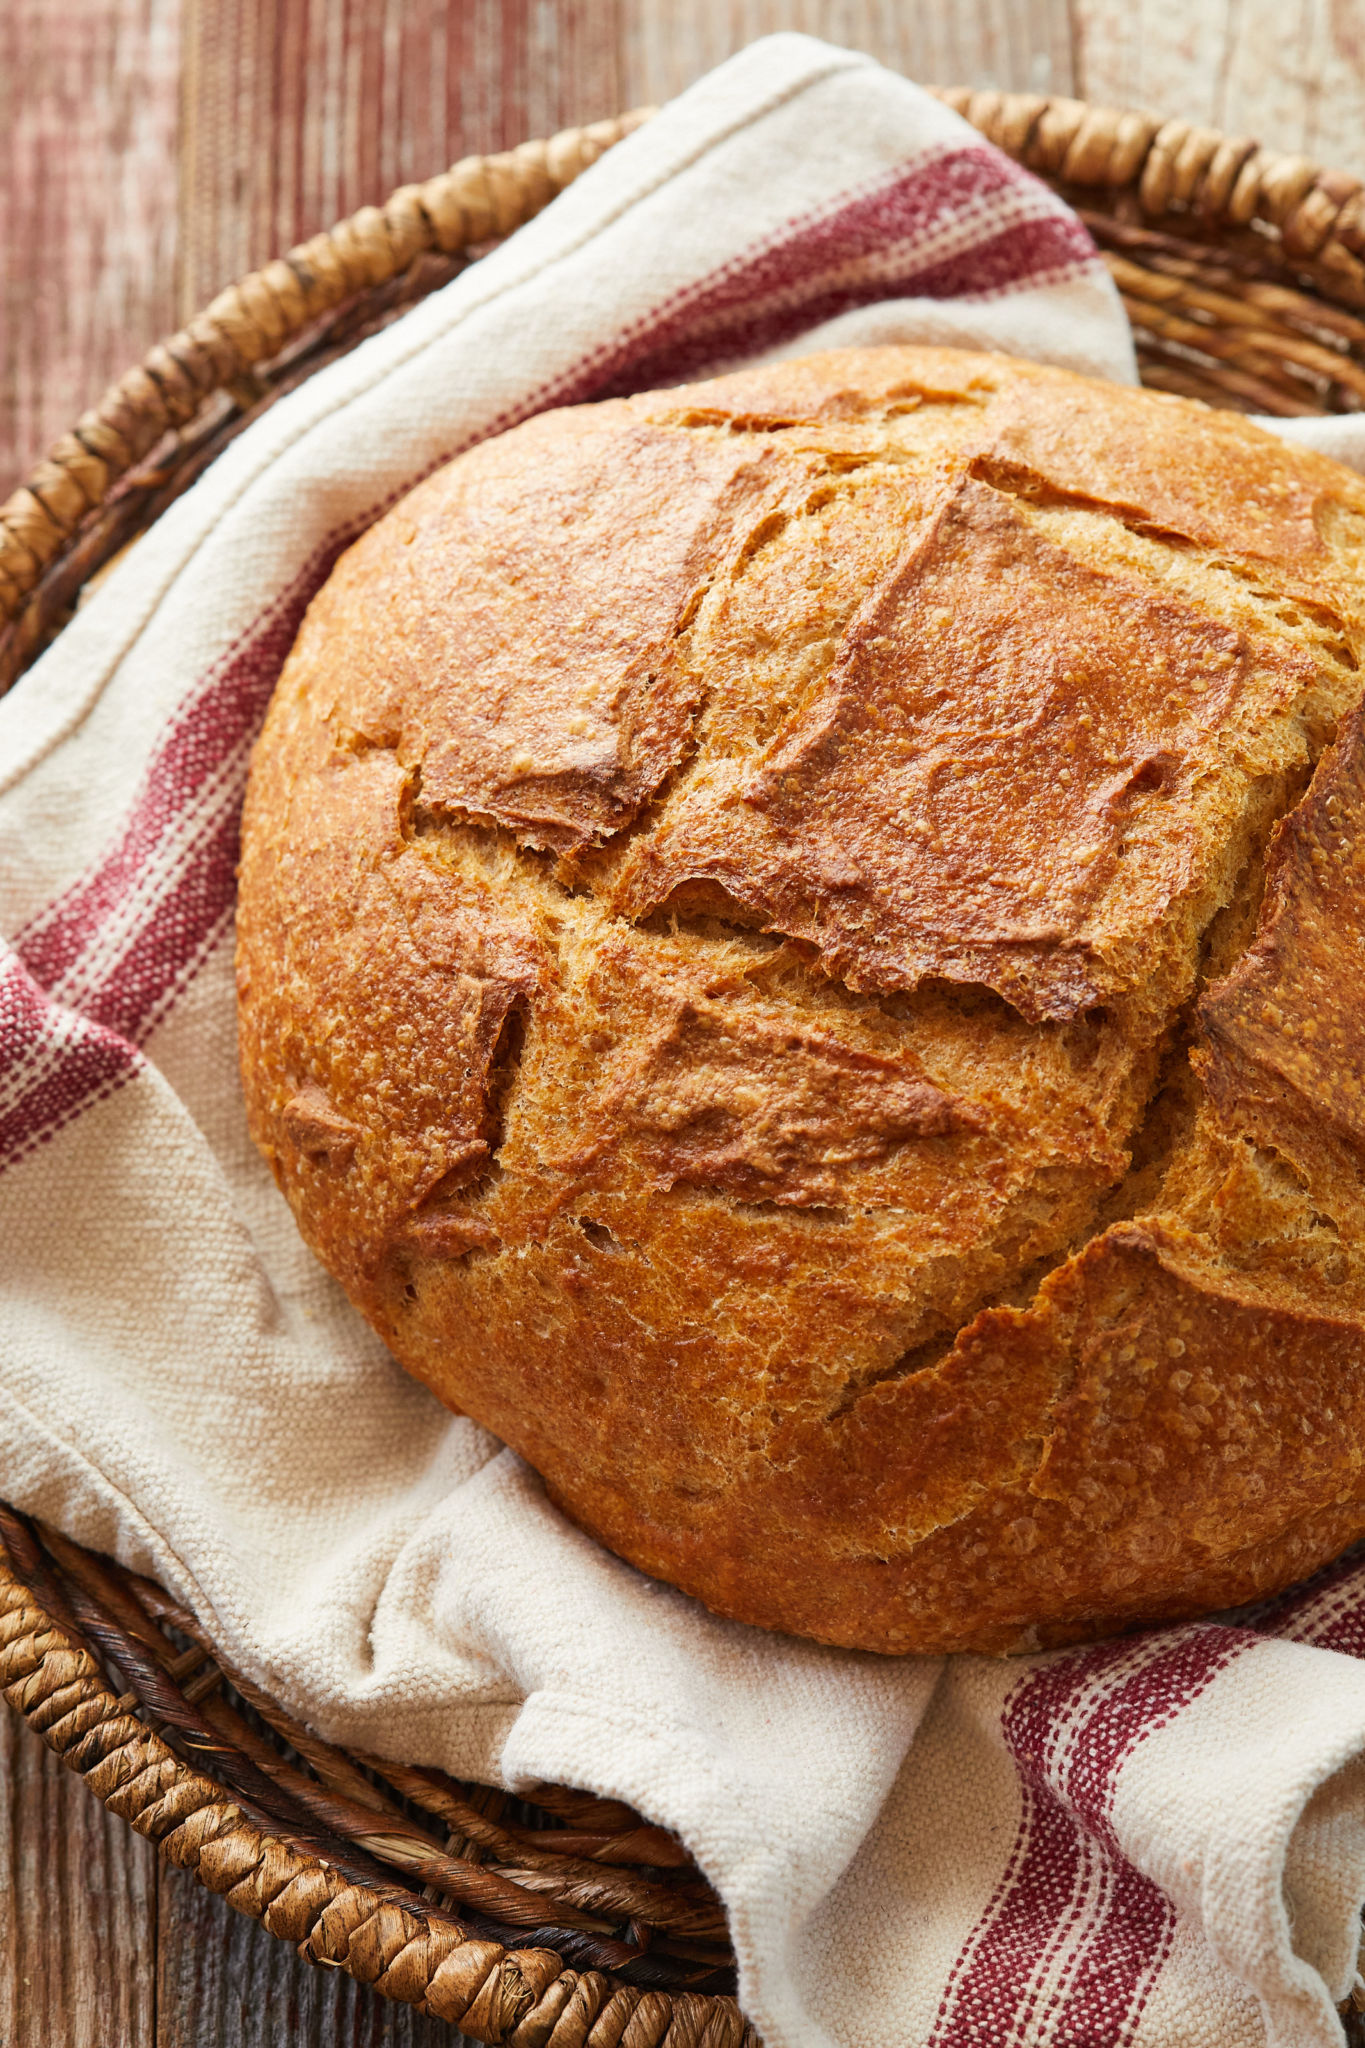 A crusty loaf of Whole Wheat Sourdough Bread in a basket.